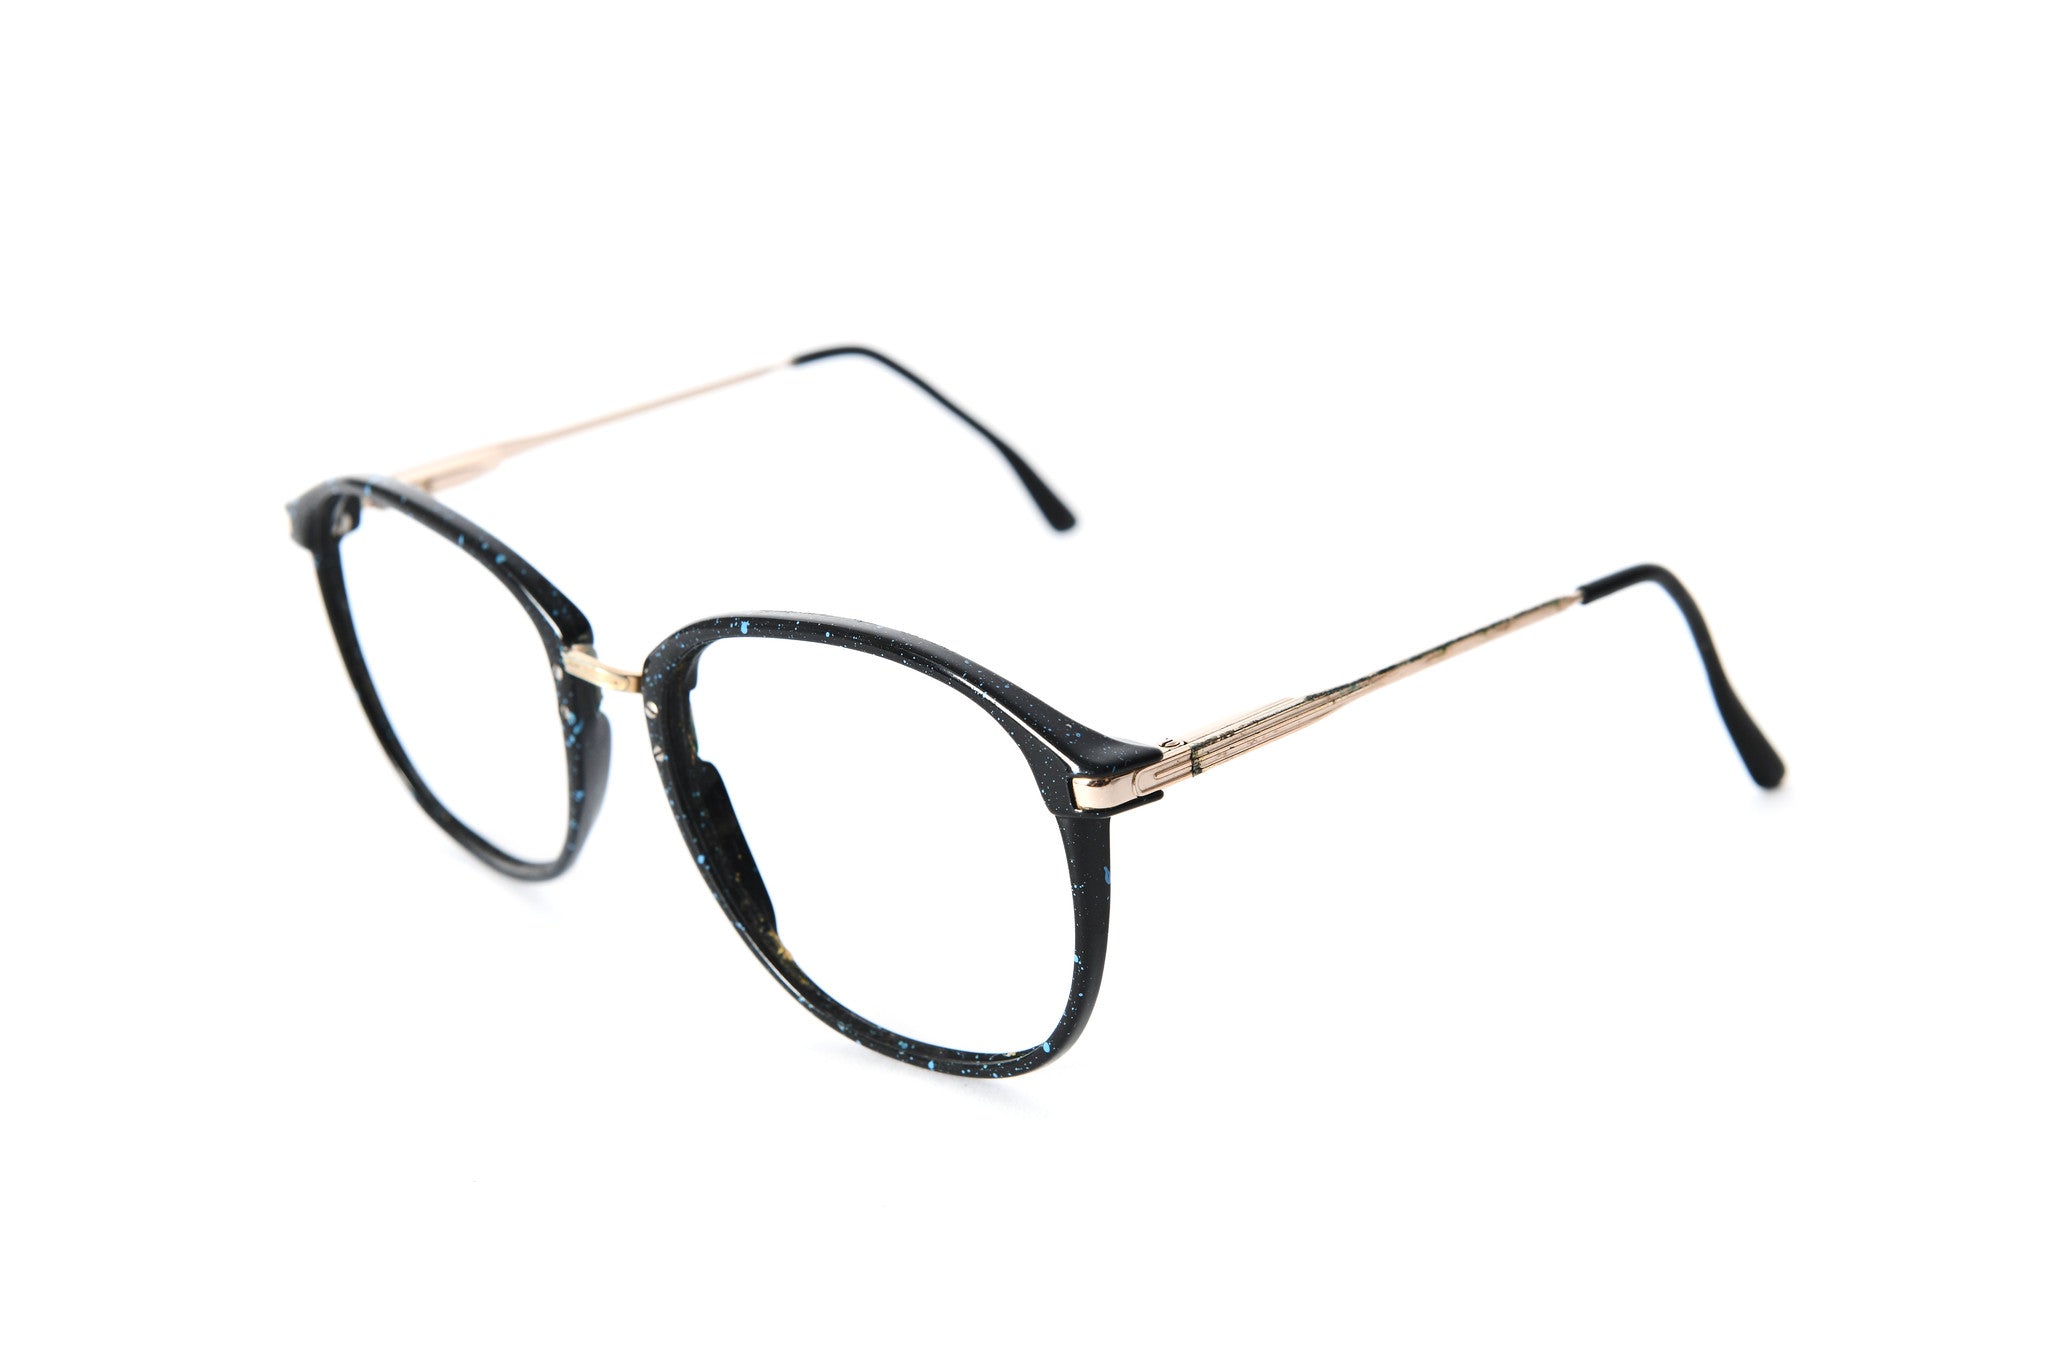 Retro Black/Blue Speckled Glasses